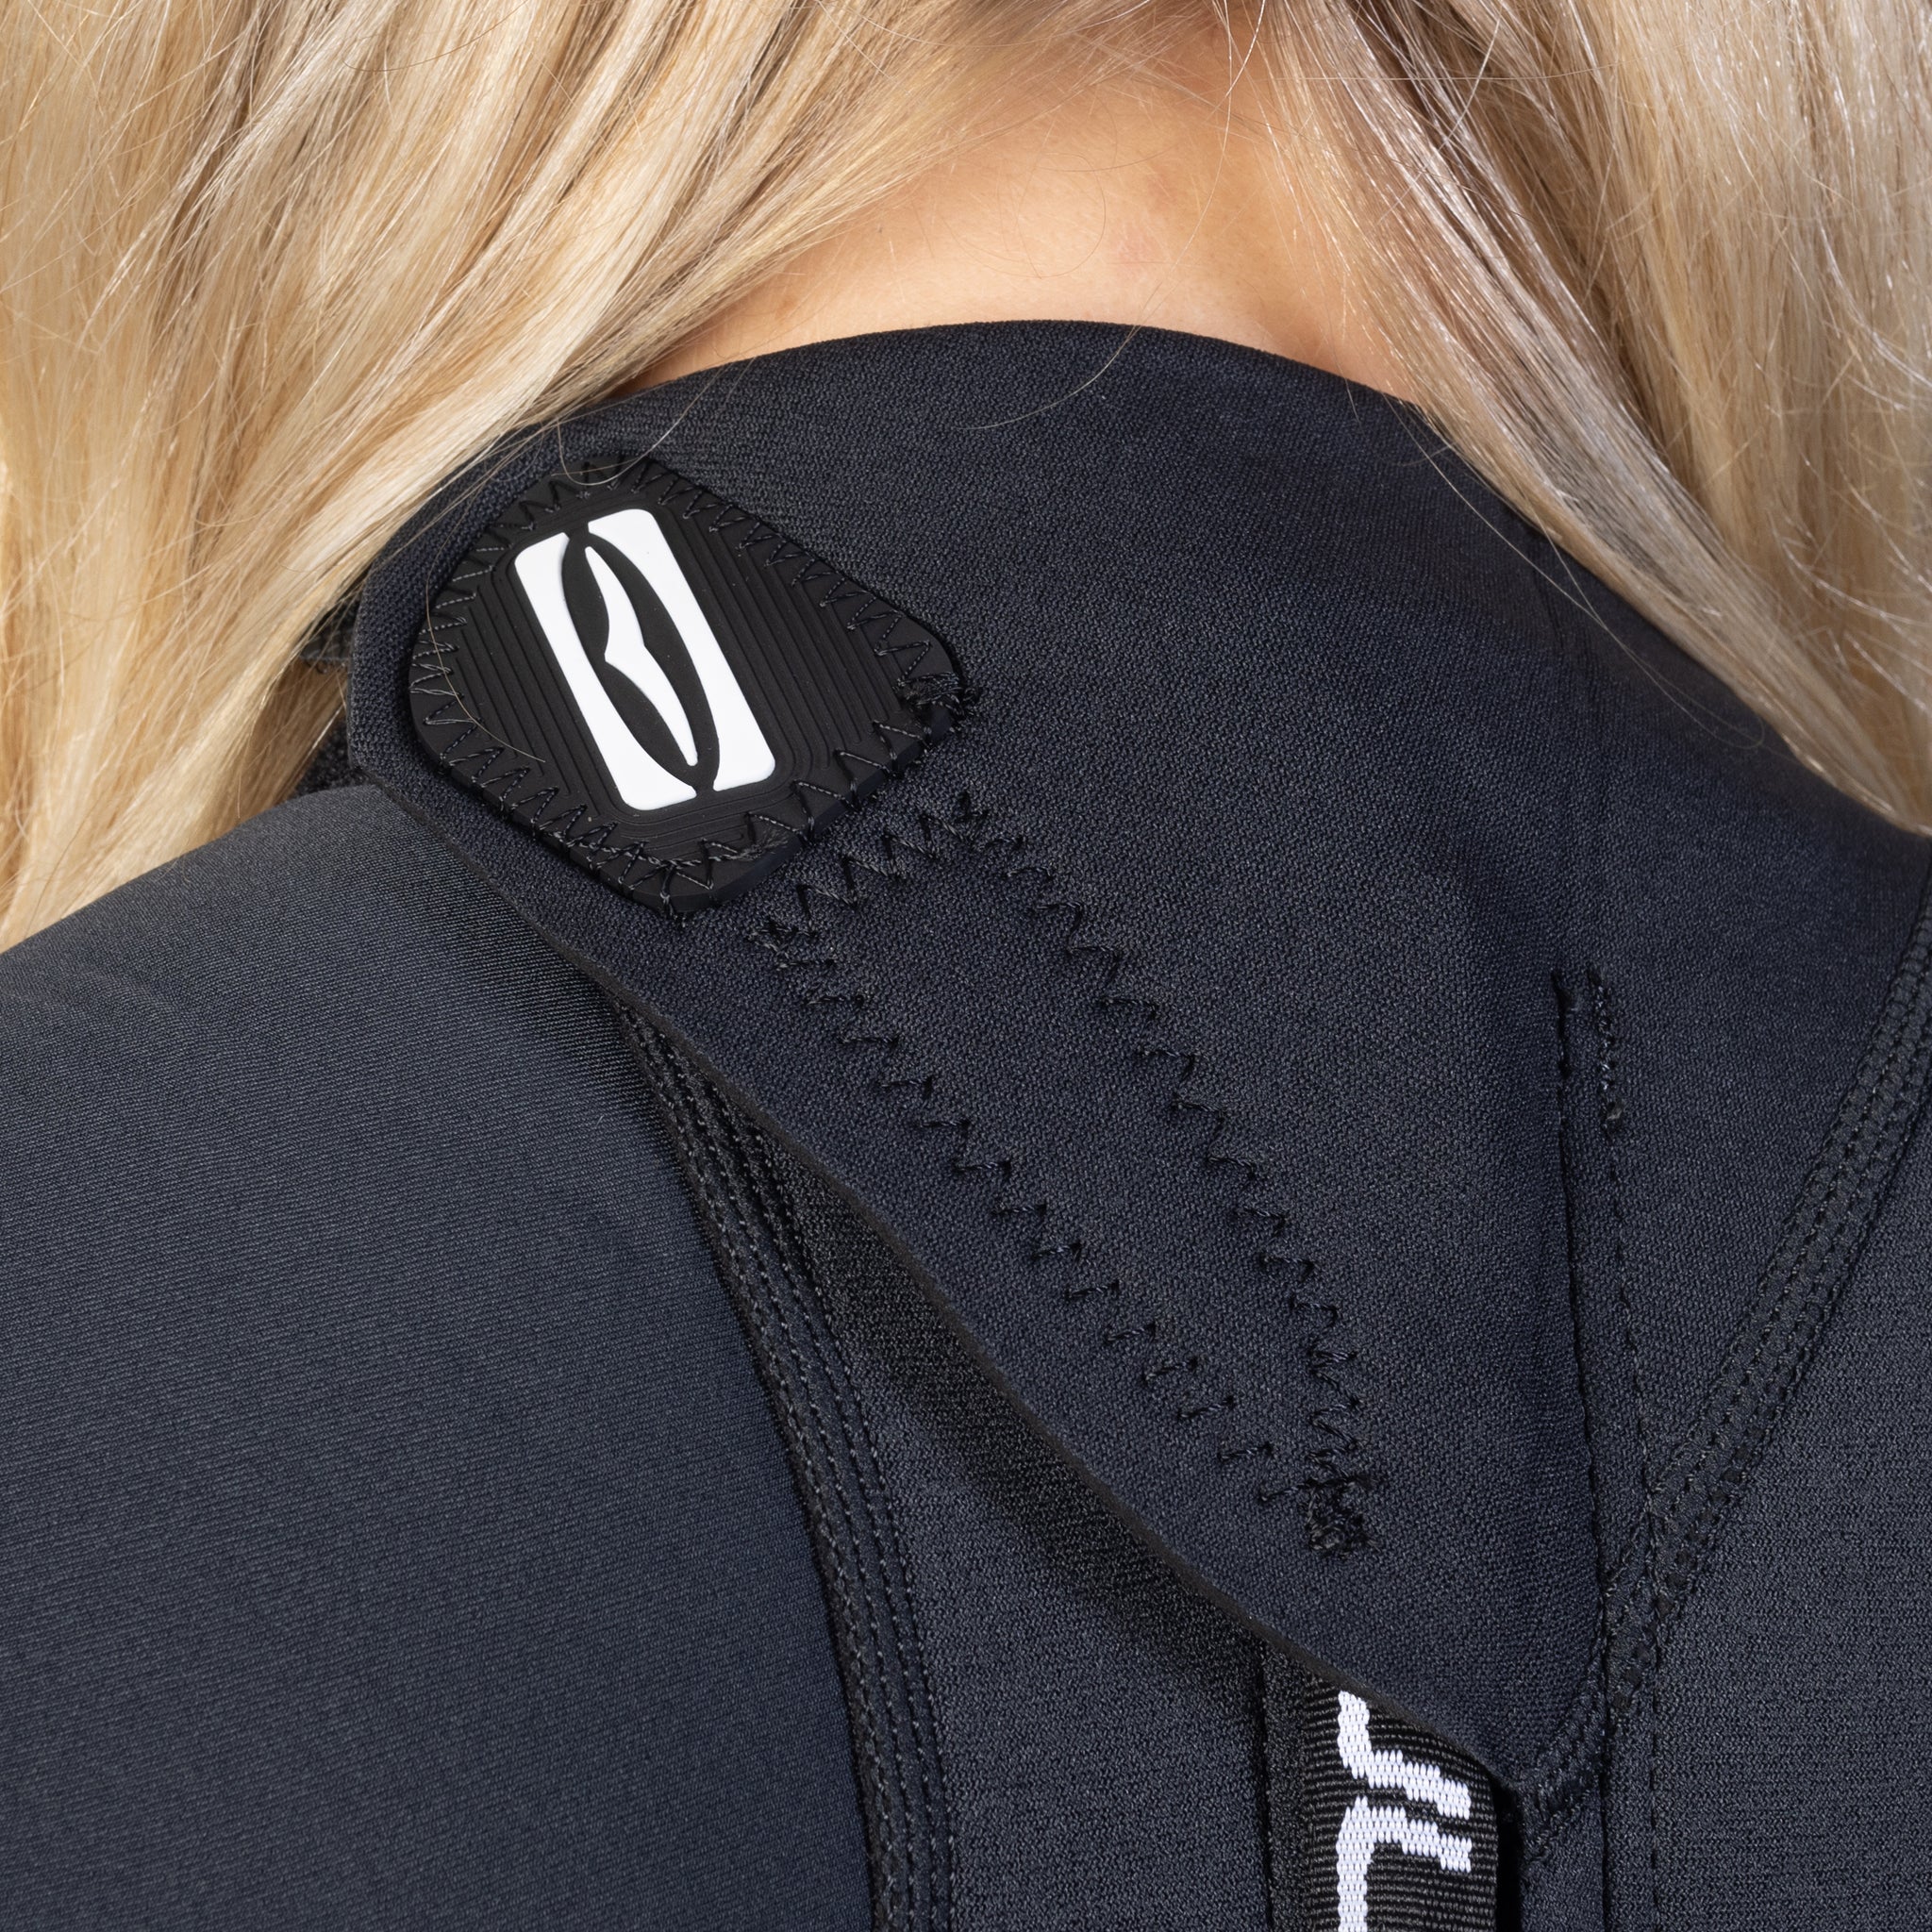 Gul Response 3/2mm Women's Long Sleeve Spring Wetsuit | Rear Zip neck detail